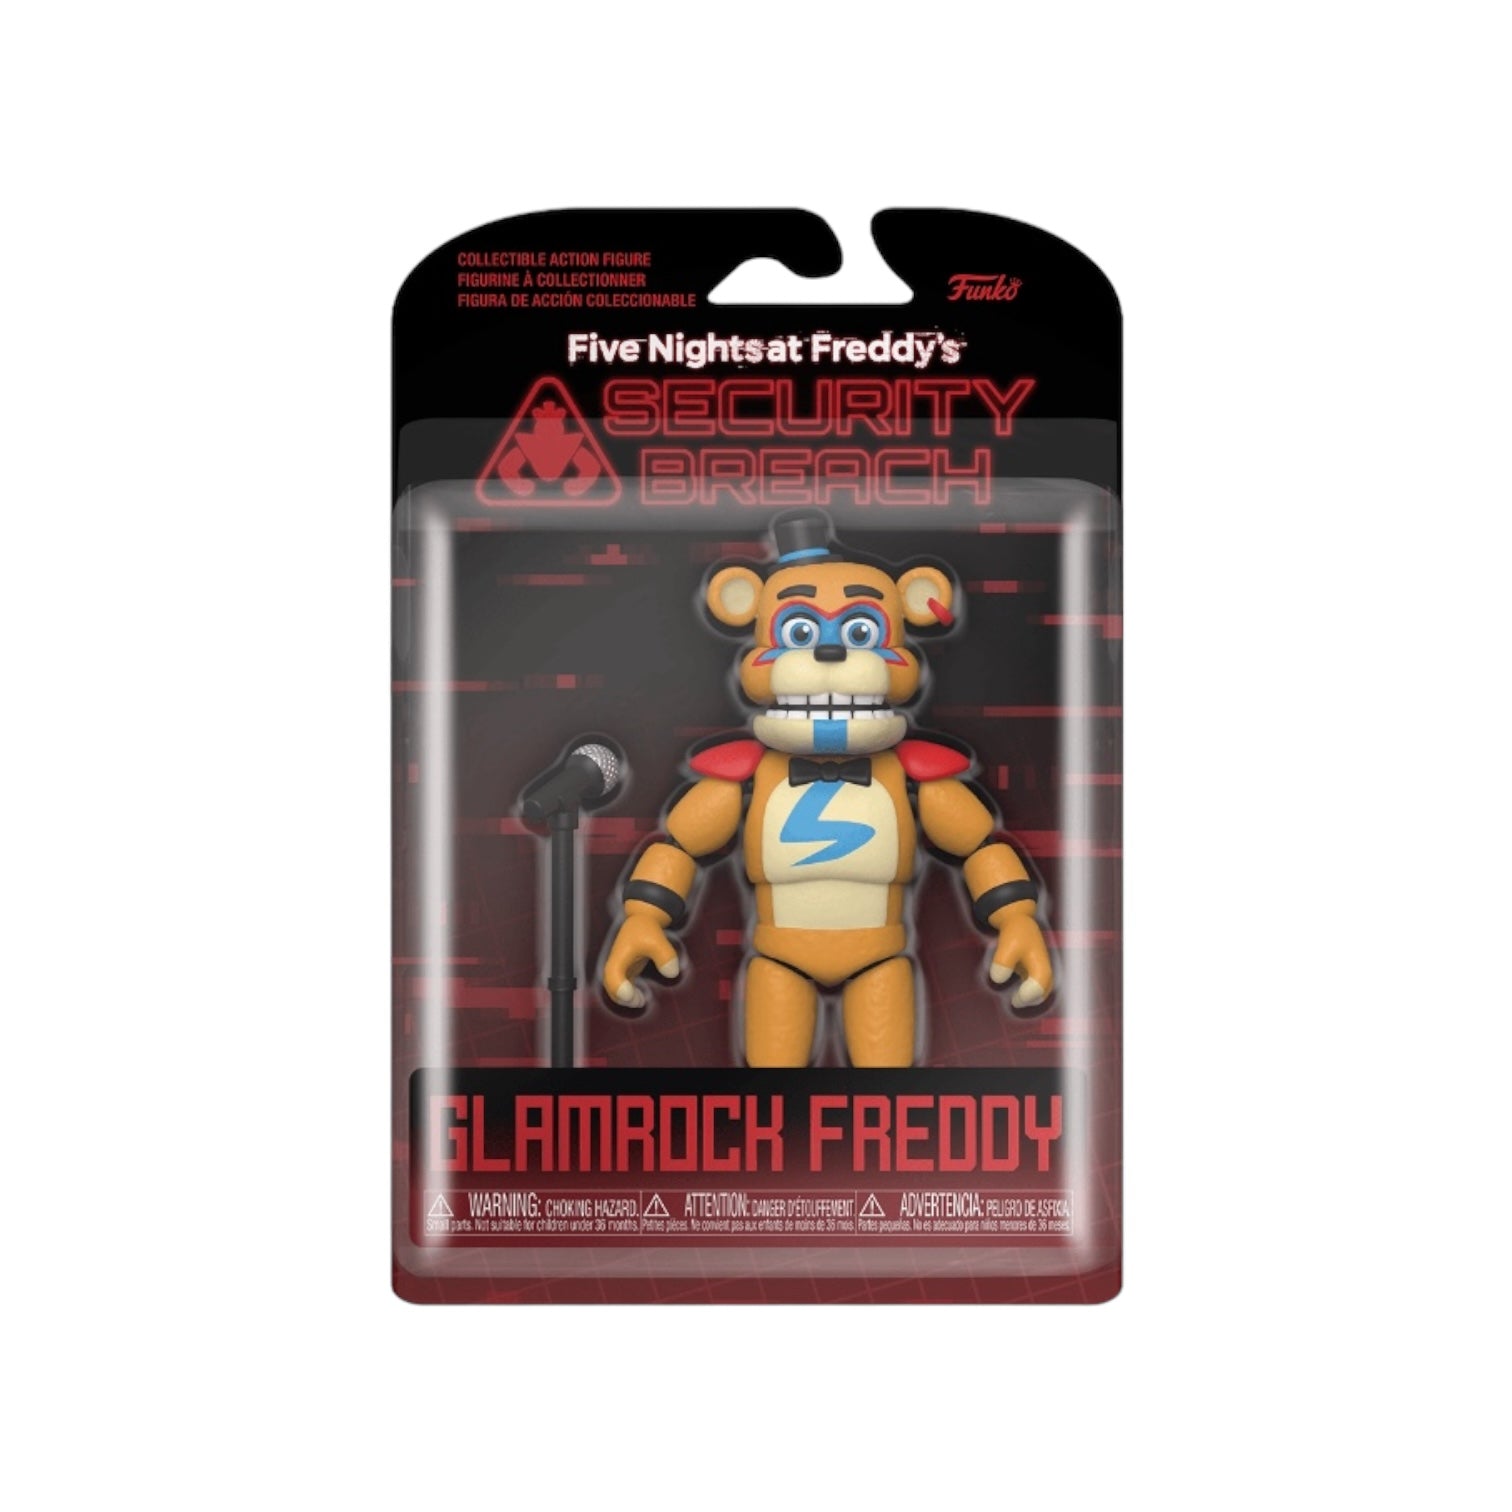 Glamrock Freddy Funko Action Figure - Five Nights at Freddy's